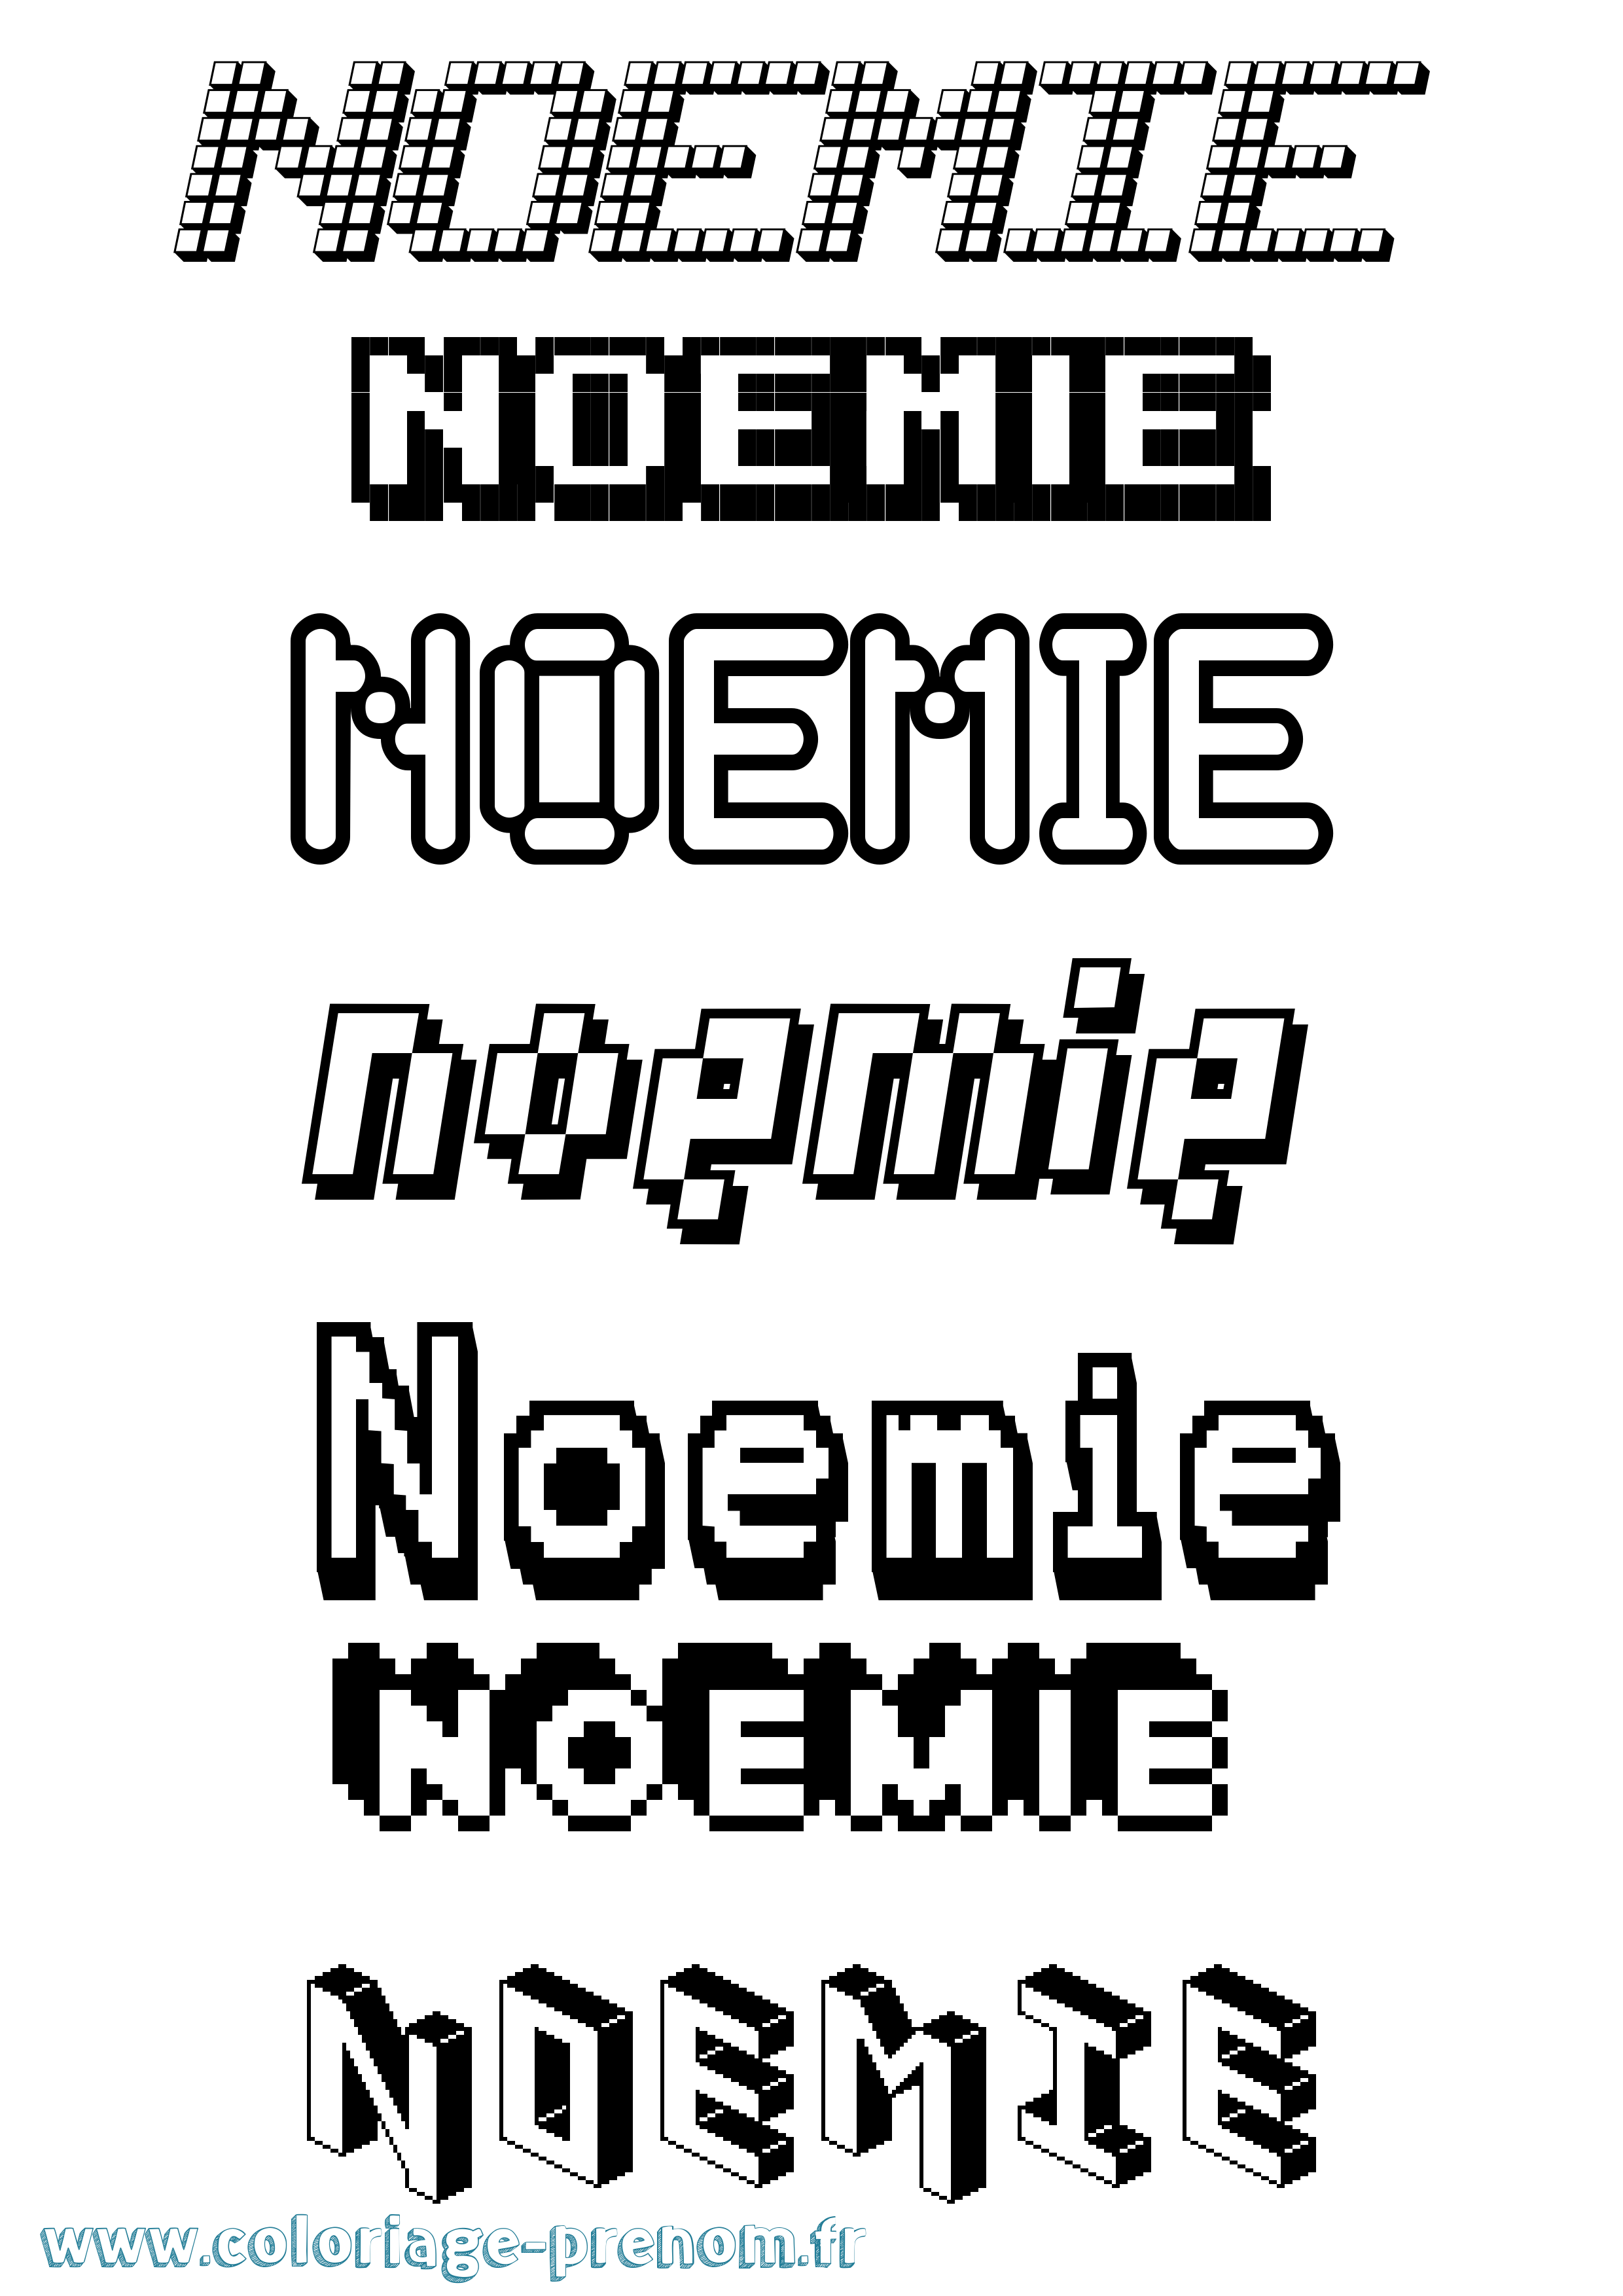 Coloriage prénom Noemie Pixel